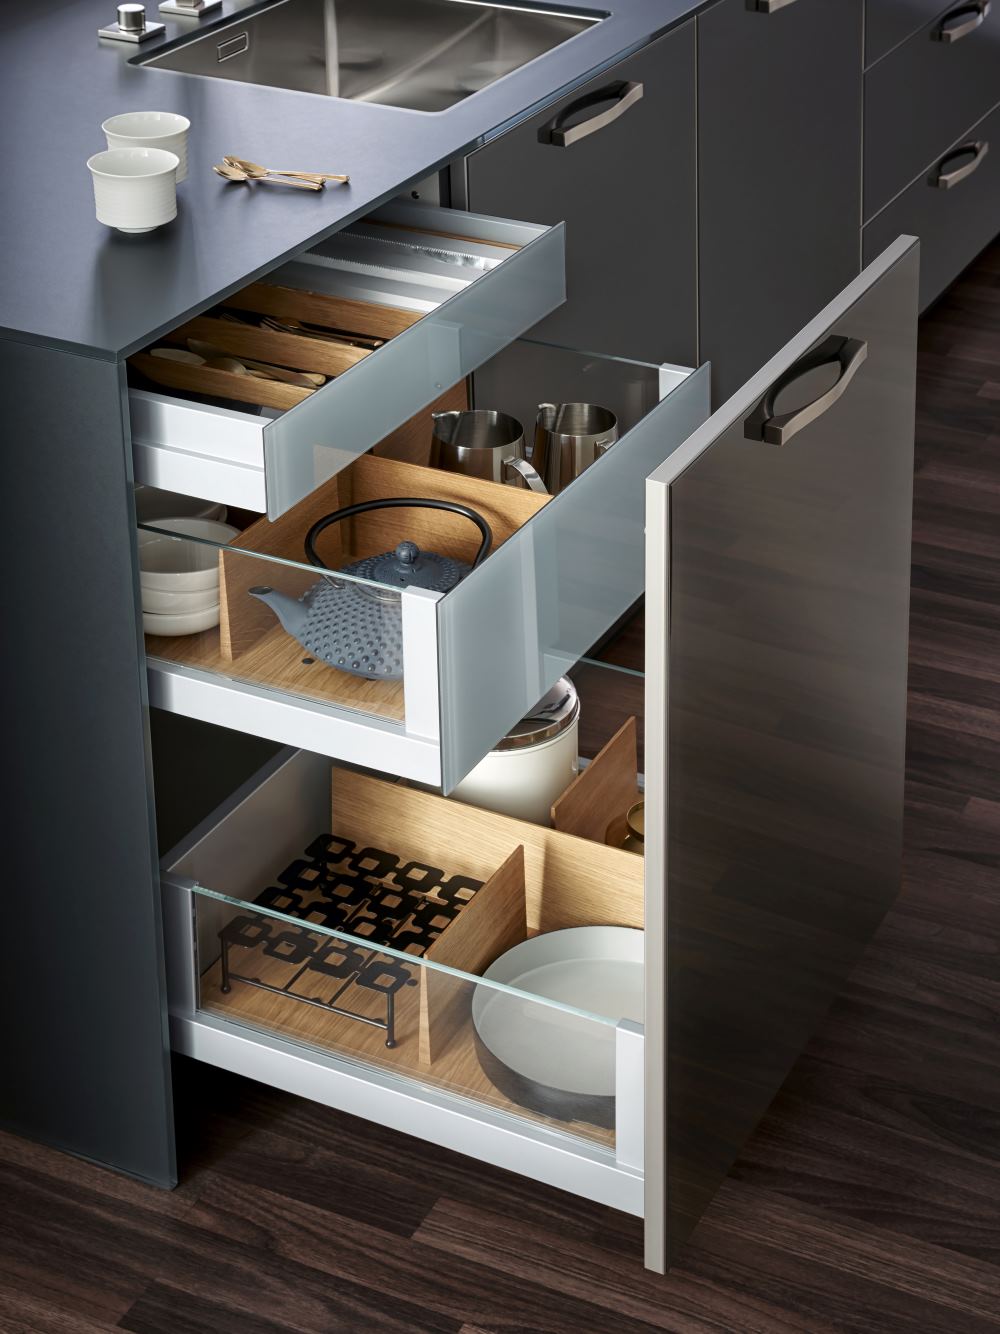 three drawers with organized utensils